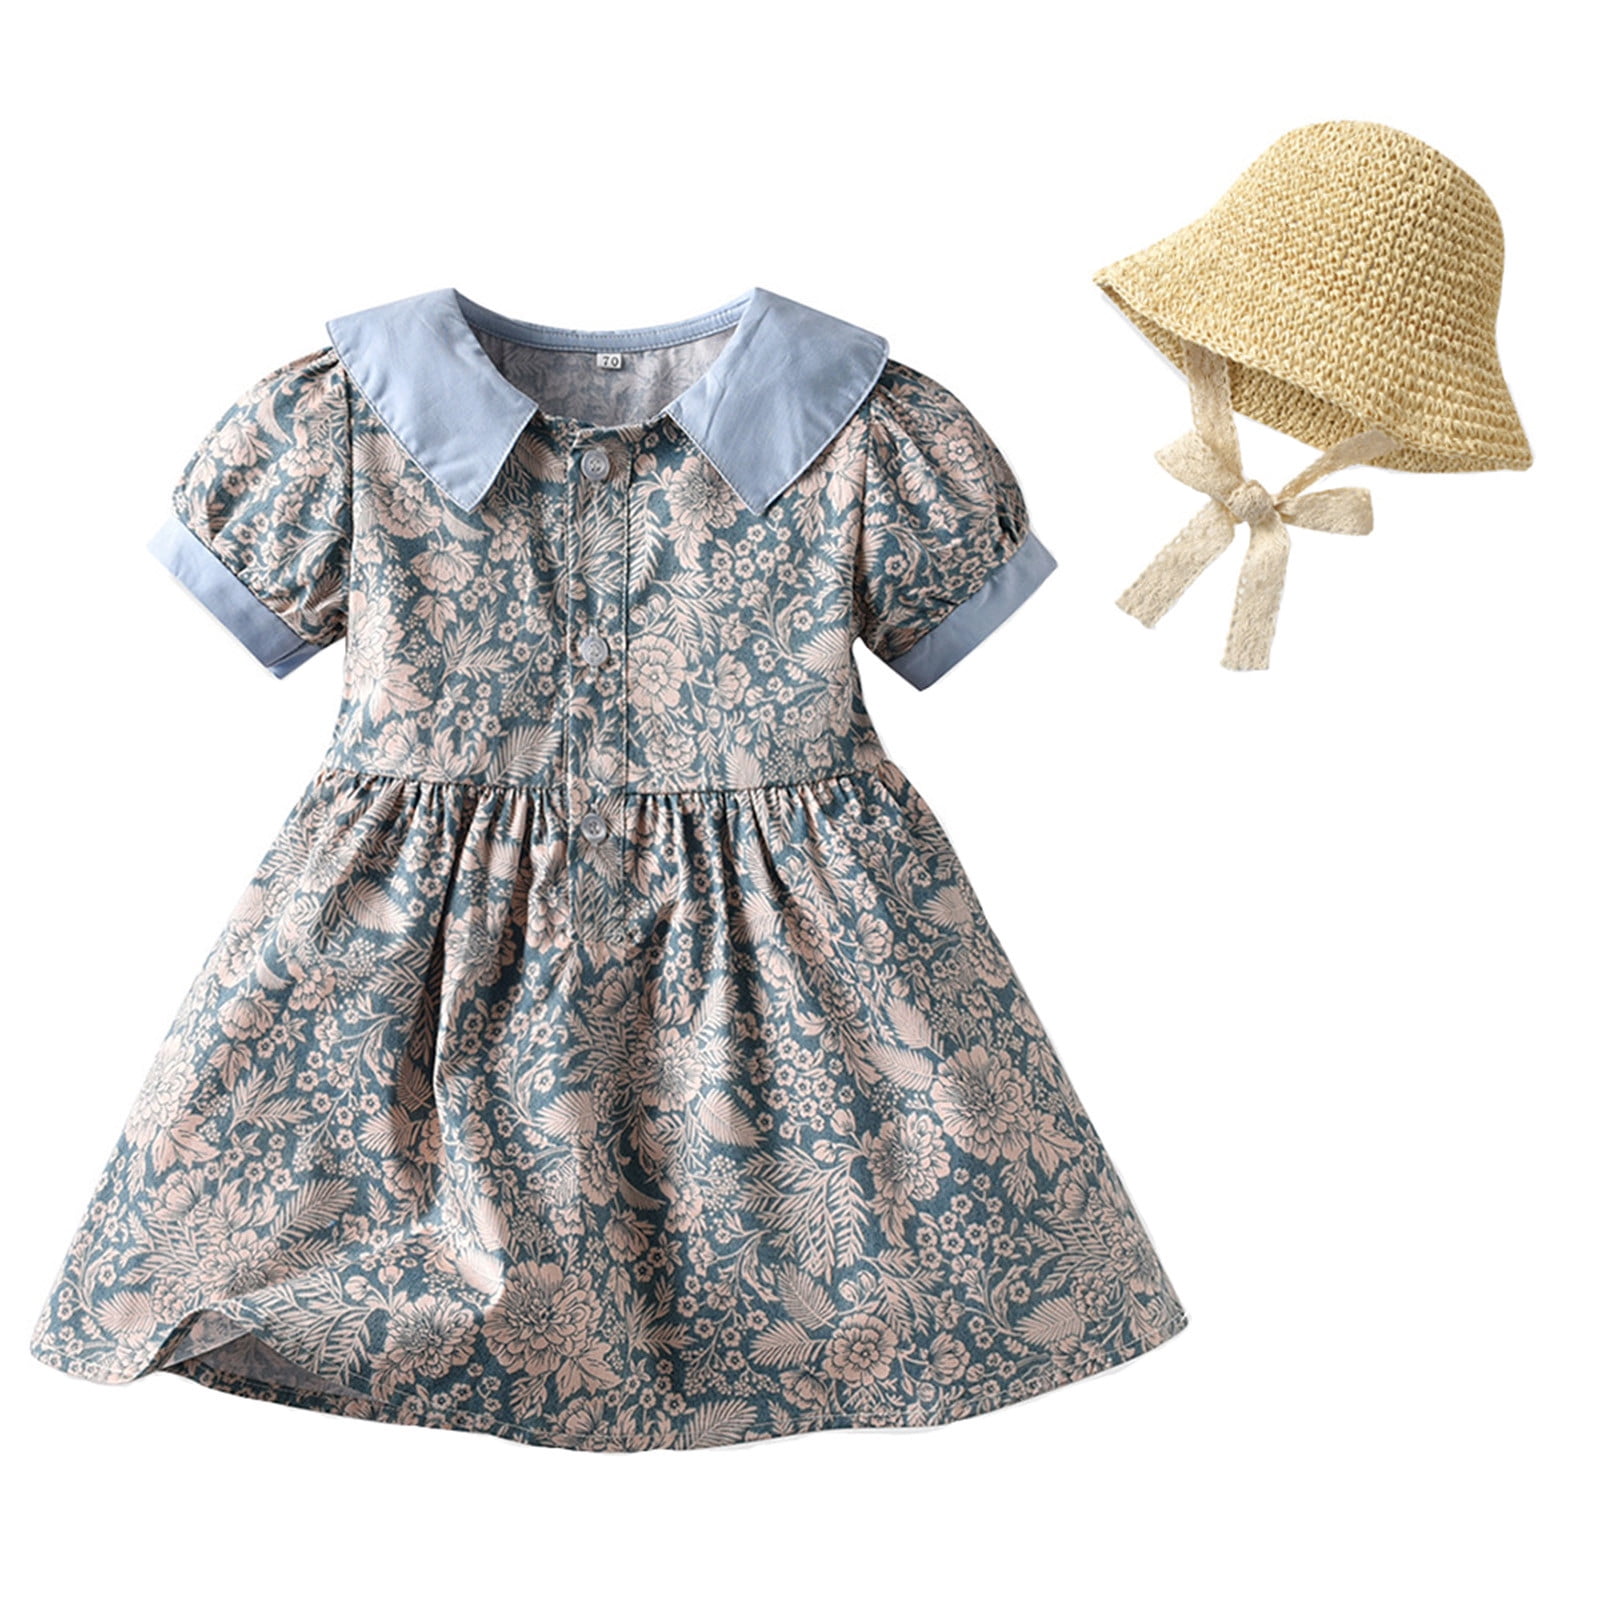 Toddler Dresses for Teens Girls Kids Baby Spring Summer Floral Cotton ...